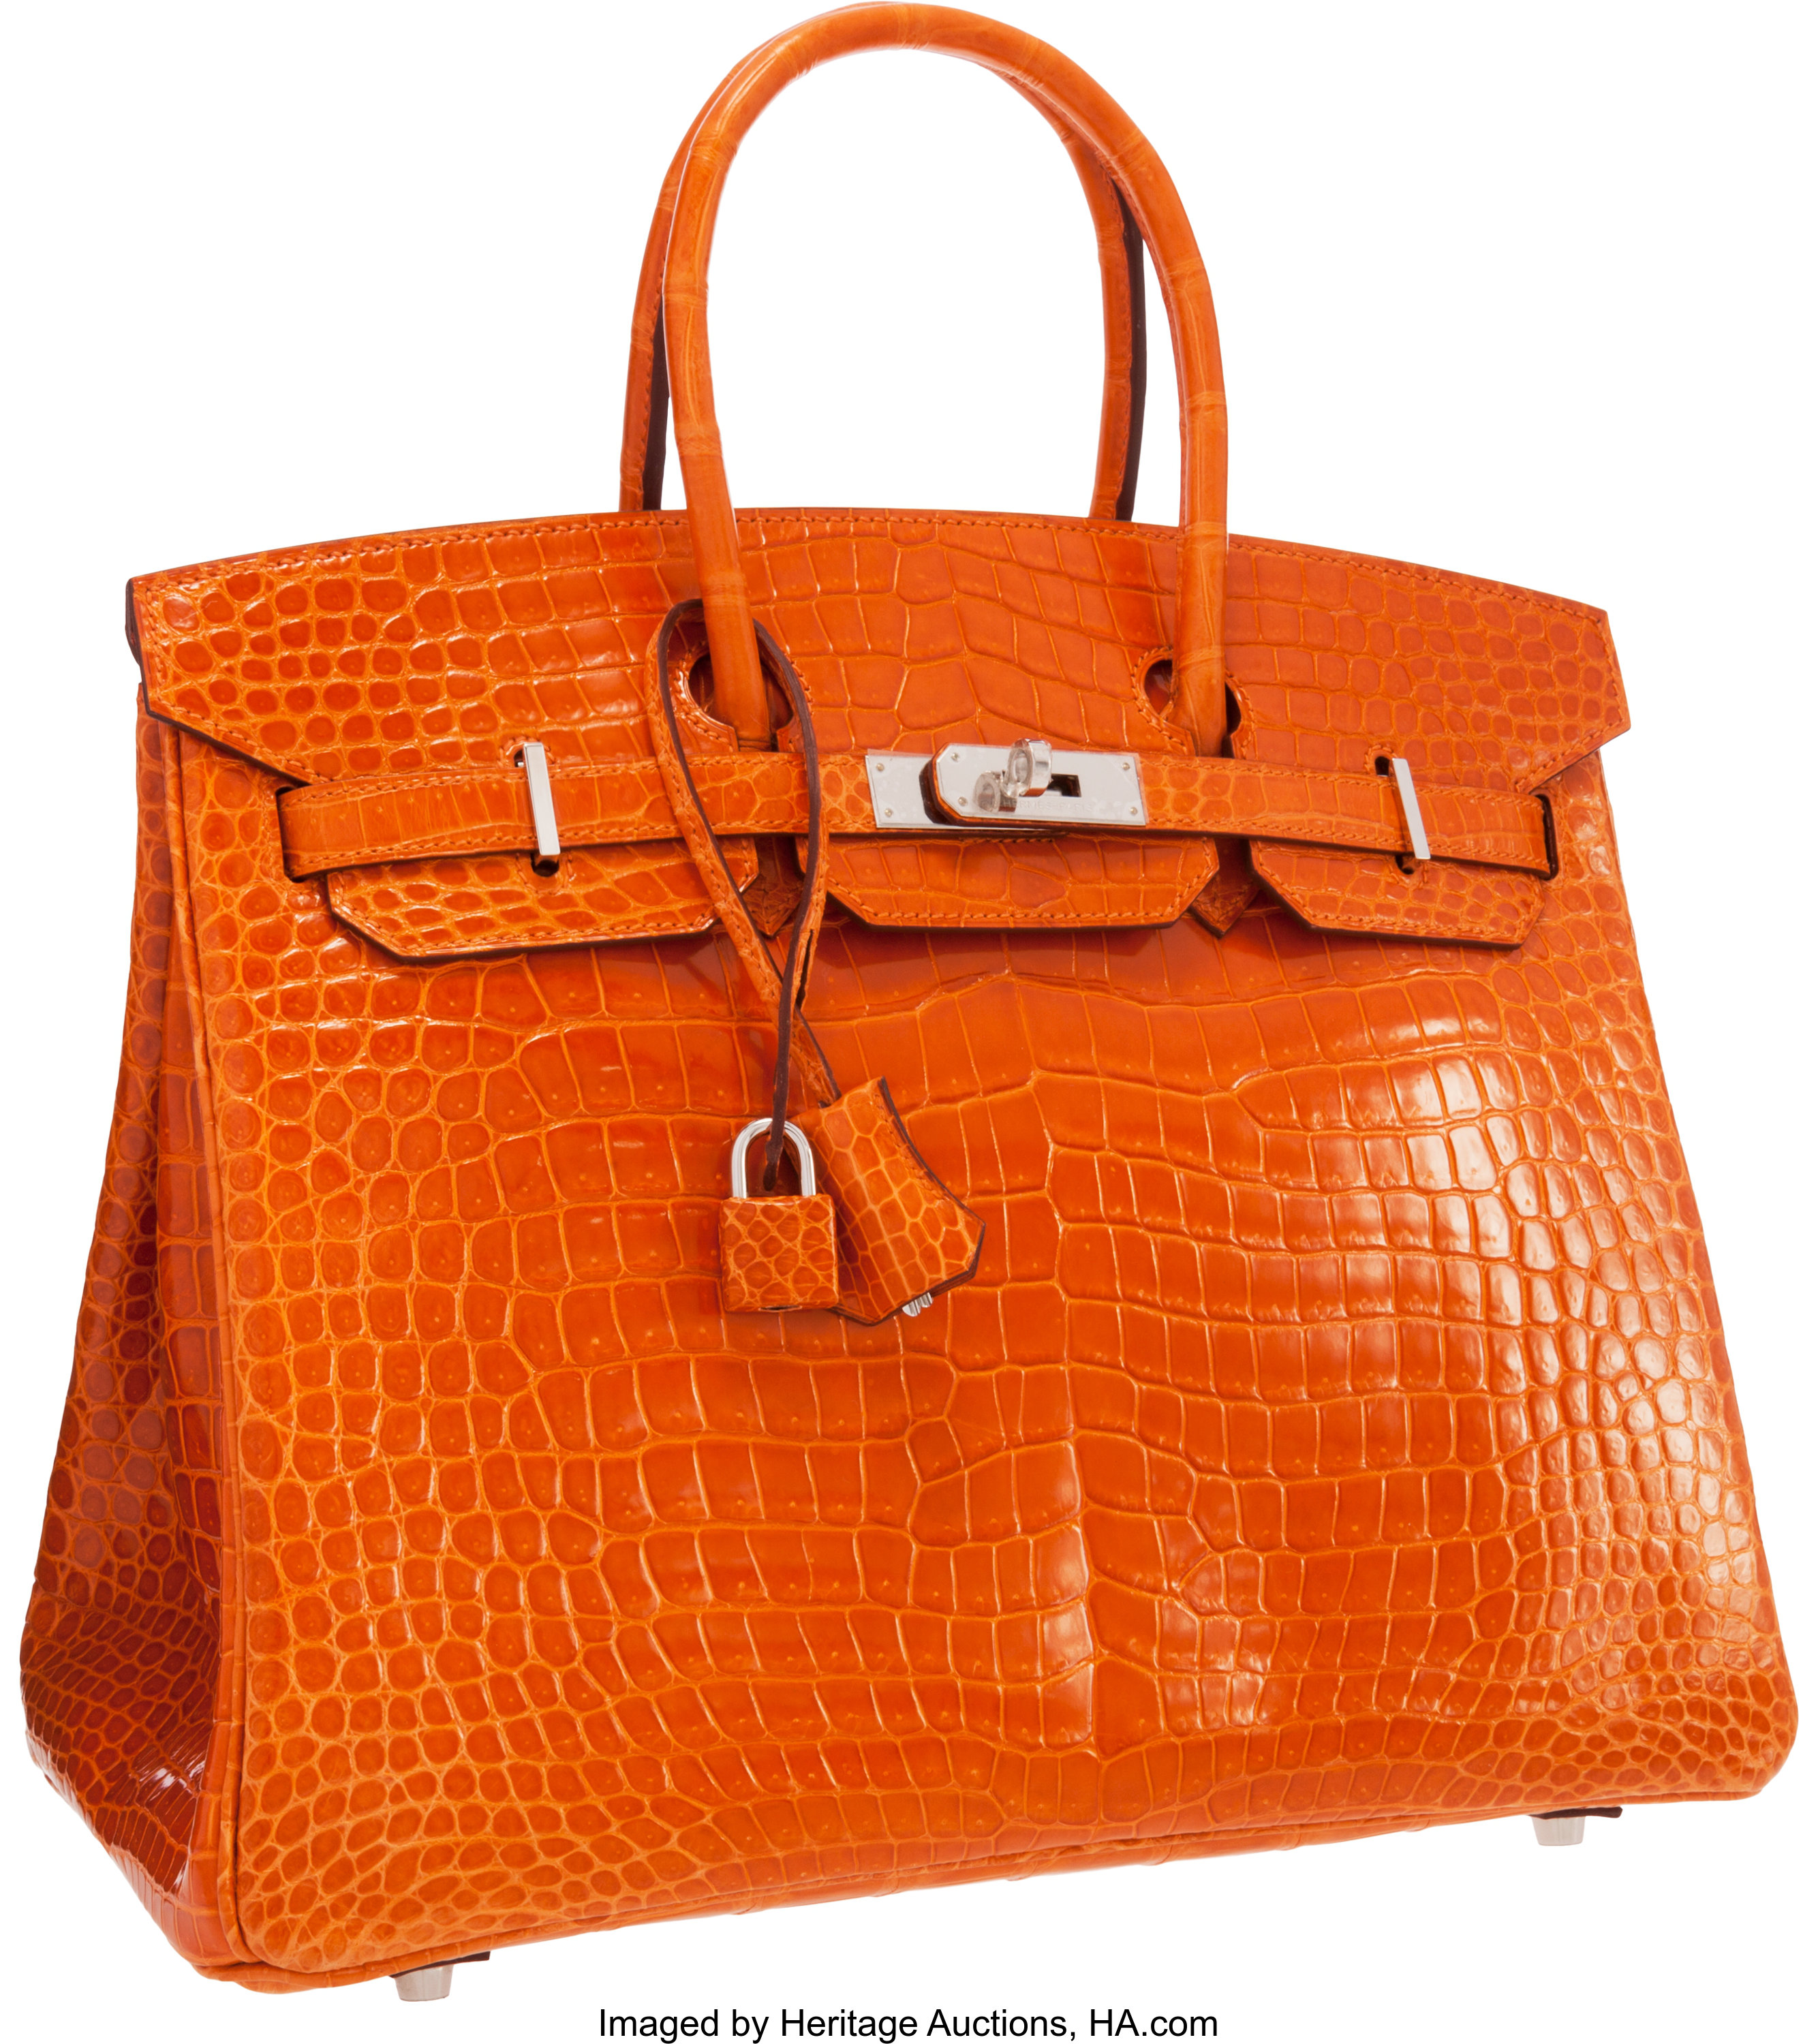 Hermes 35cm Shiny Orange H Porosus Crocodile Birkin Bag with Lot